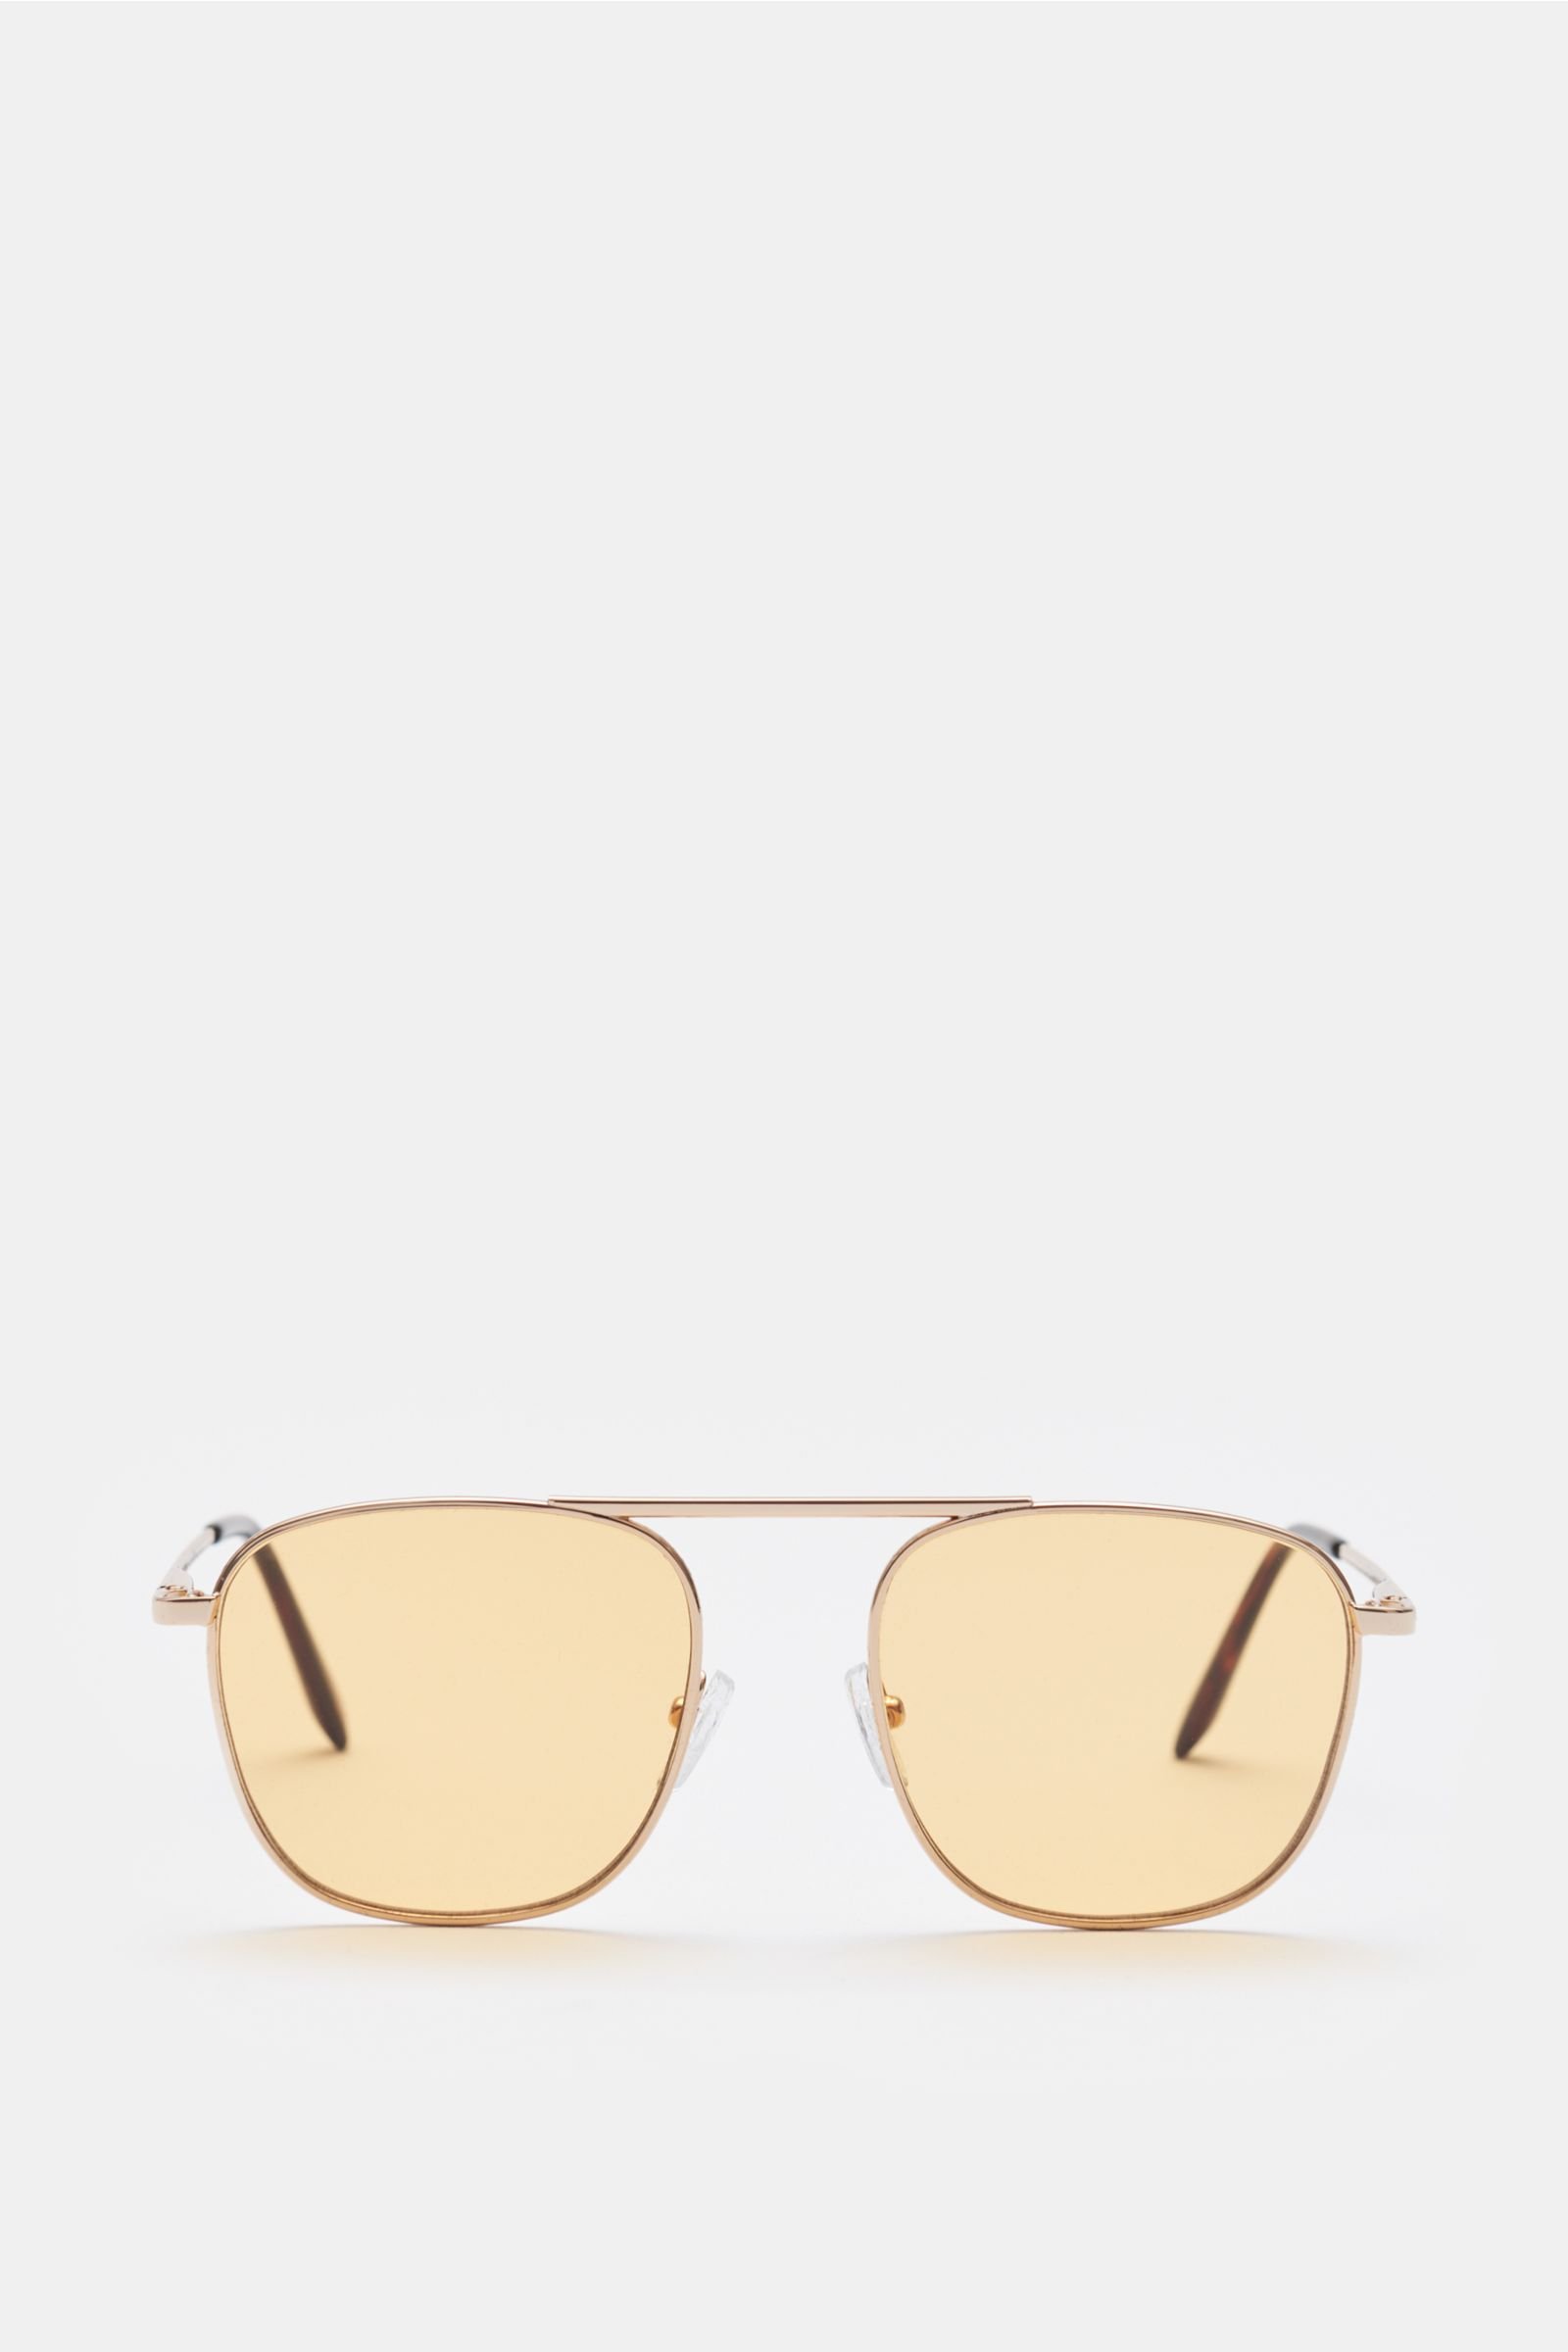 Sunglasses silver/yellow